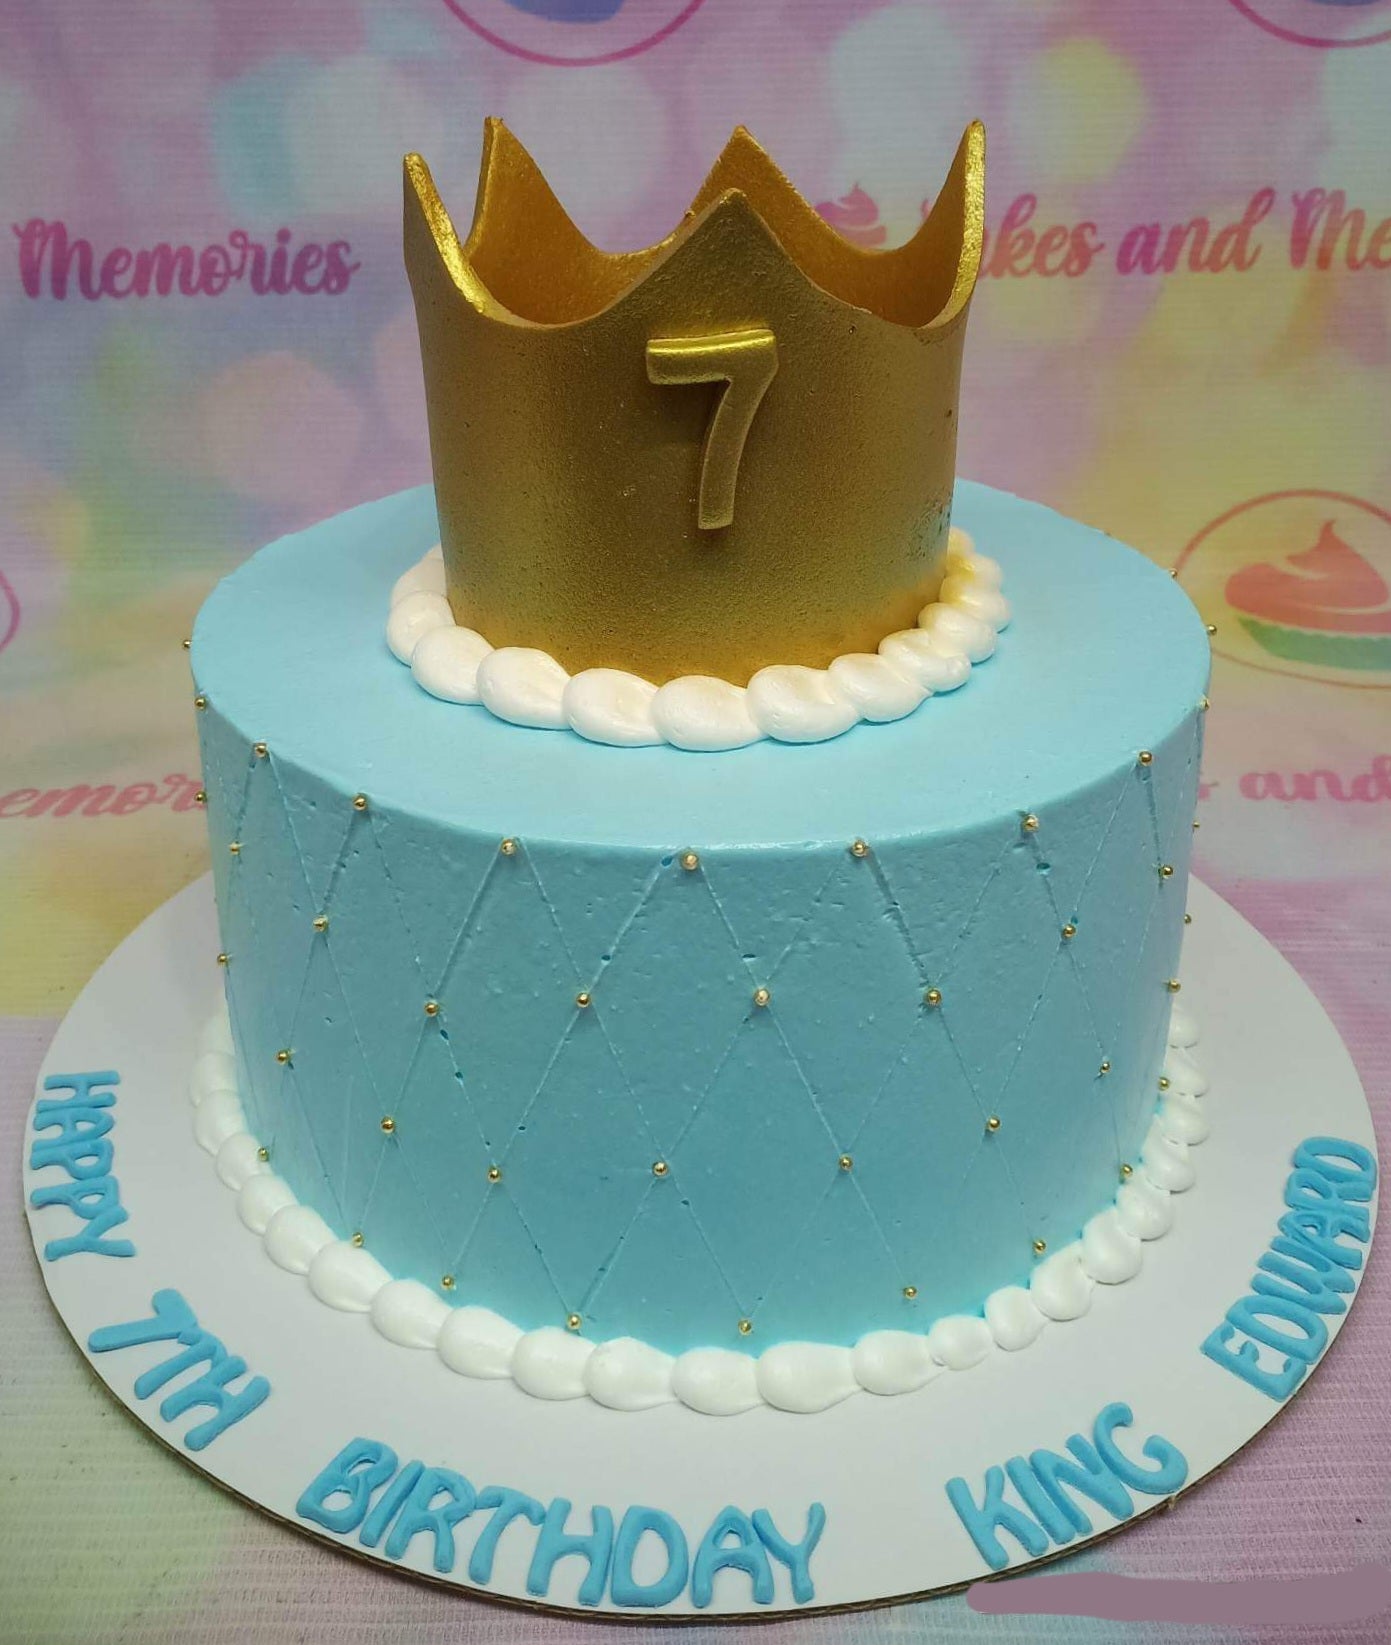 King of cakes | Lifestyle | lancasteronline.com